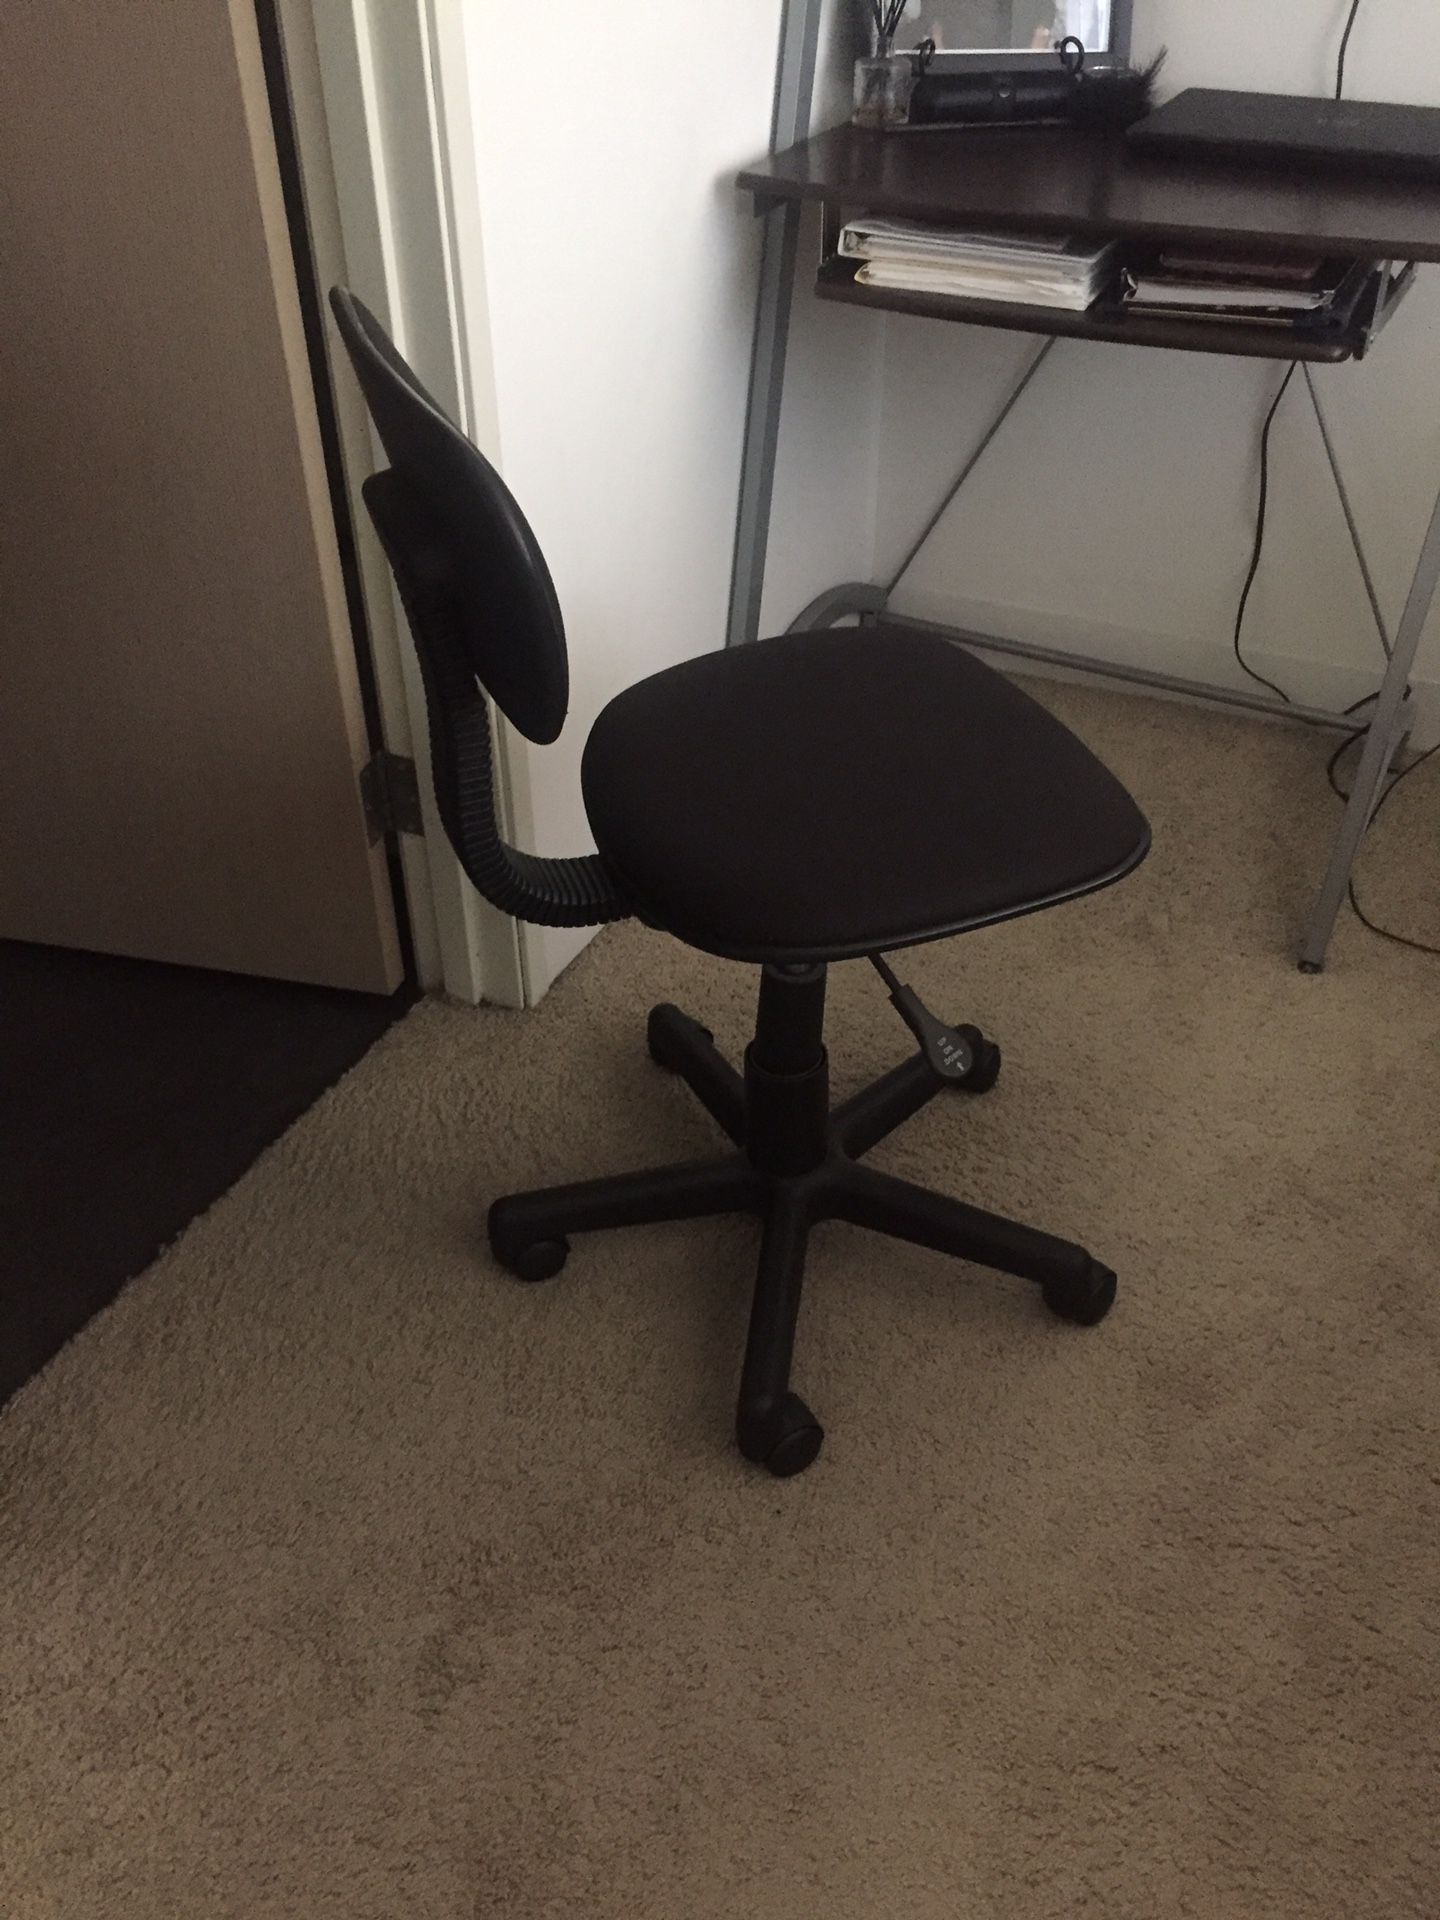 Small Black desk chair